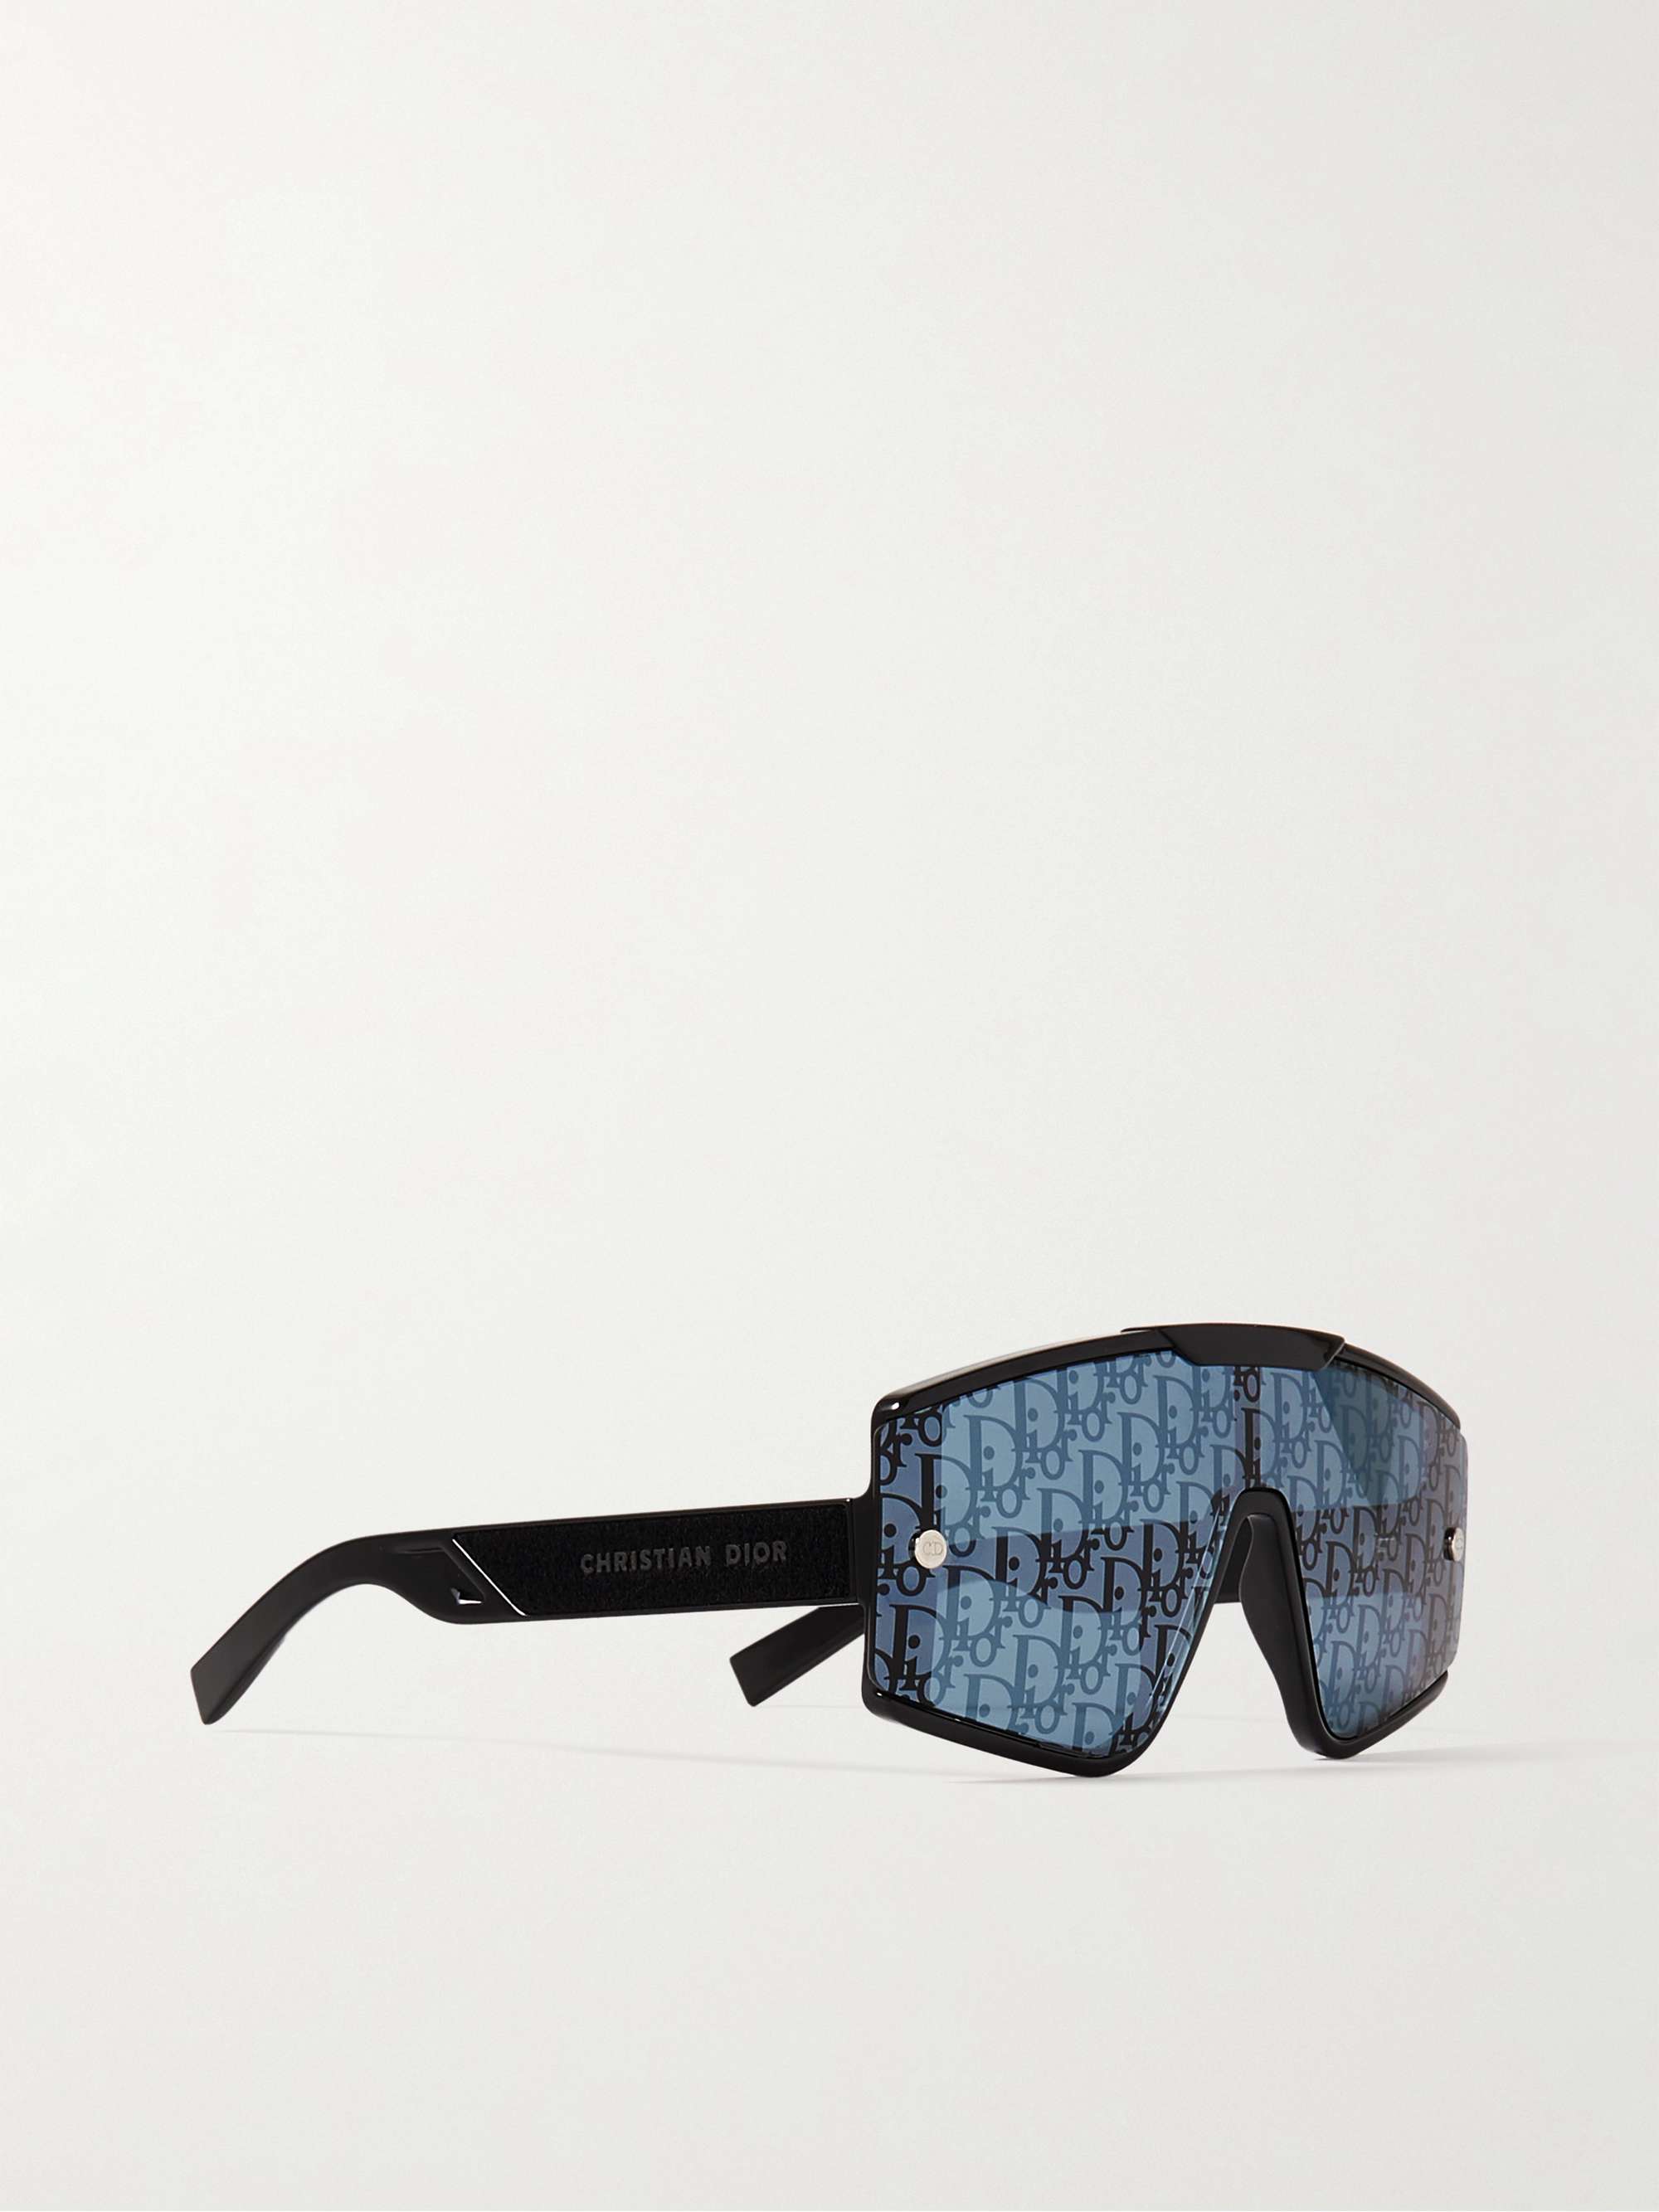 DIOR EYEWEAR DiorXtrem MU Convertible D-Frame Acetate Sunglasses